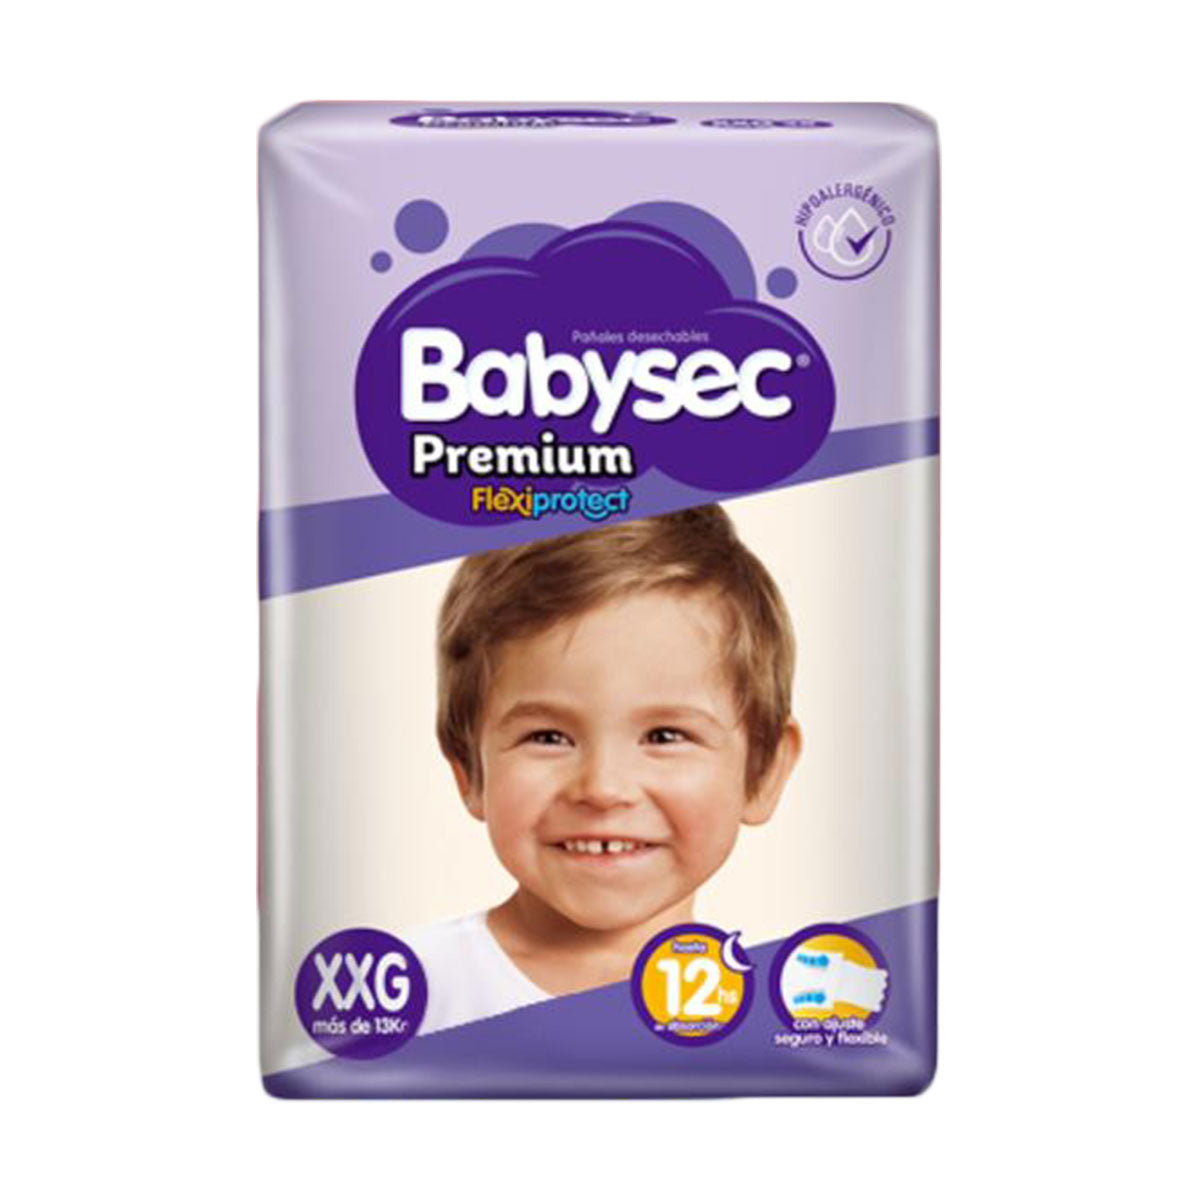 Pañales Babysec Premium XXG (112 unidades)